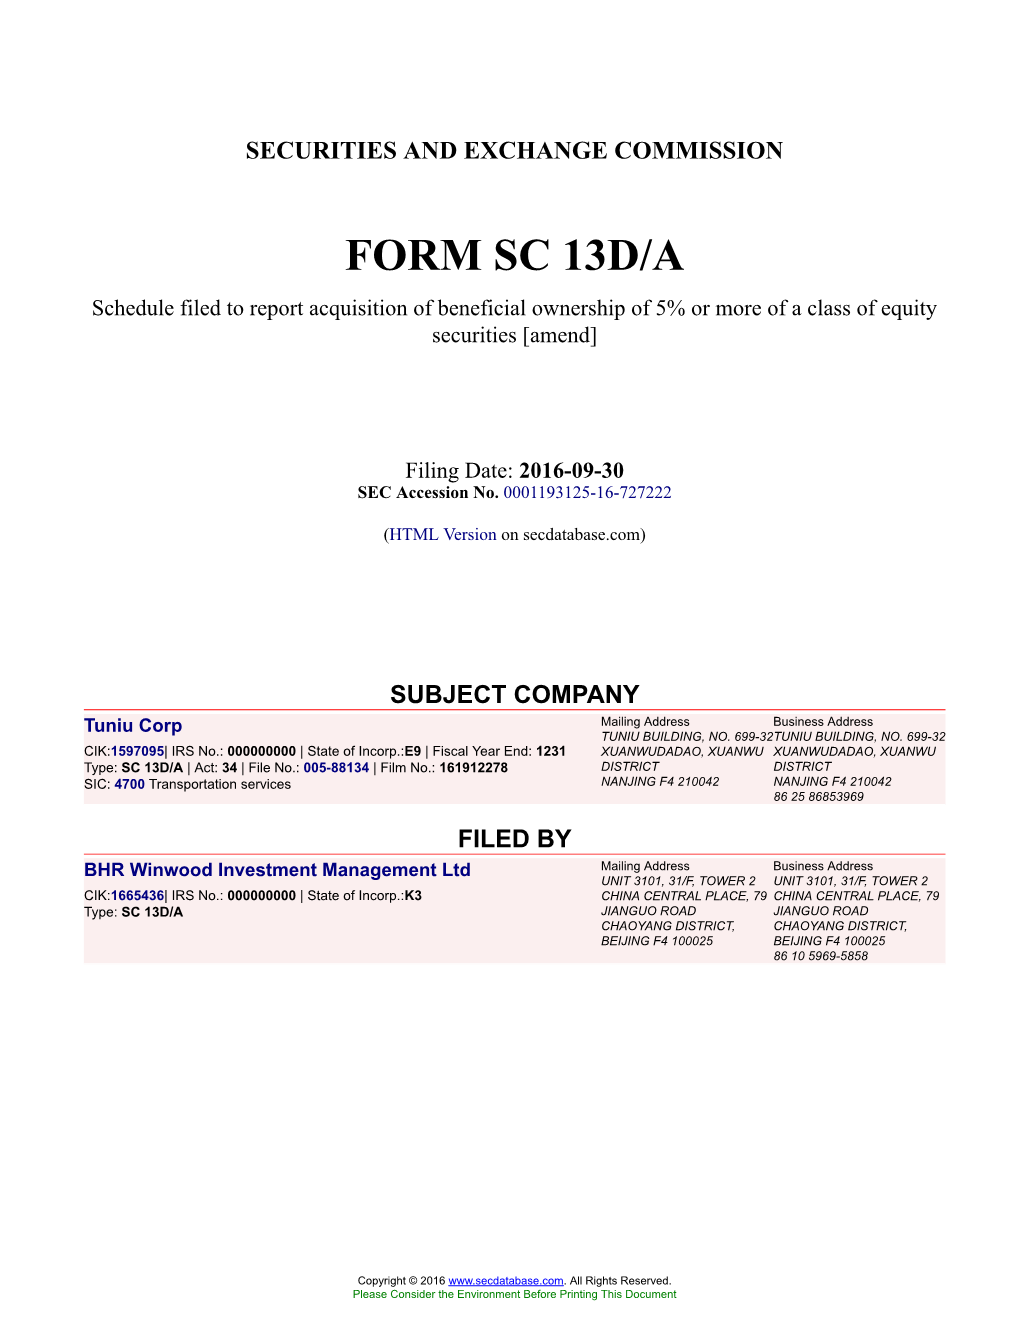 Tuniu Corp Form SC 13D/A Filed 2016-09-30